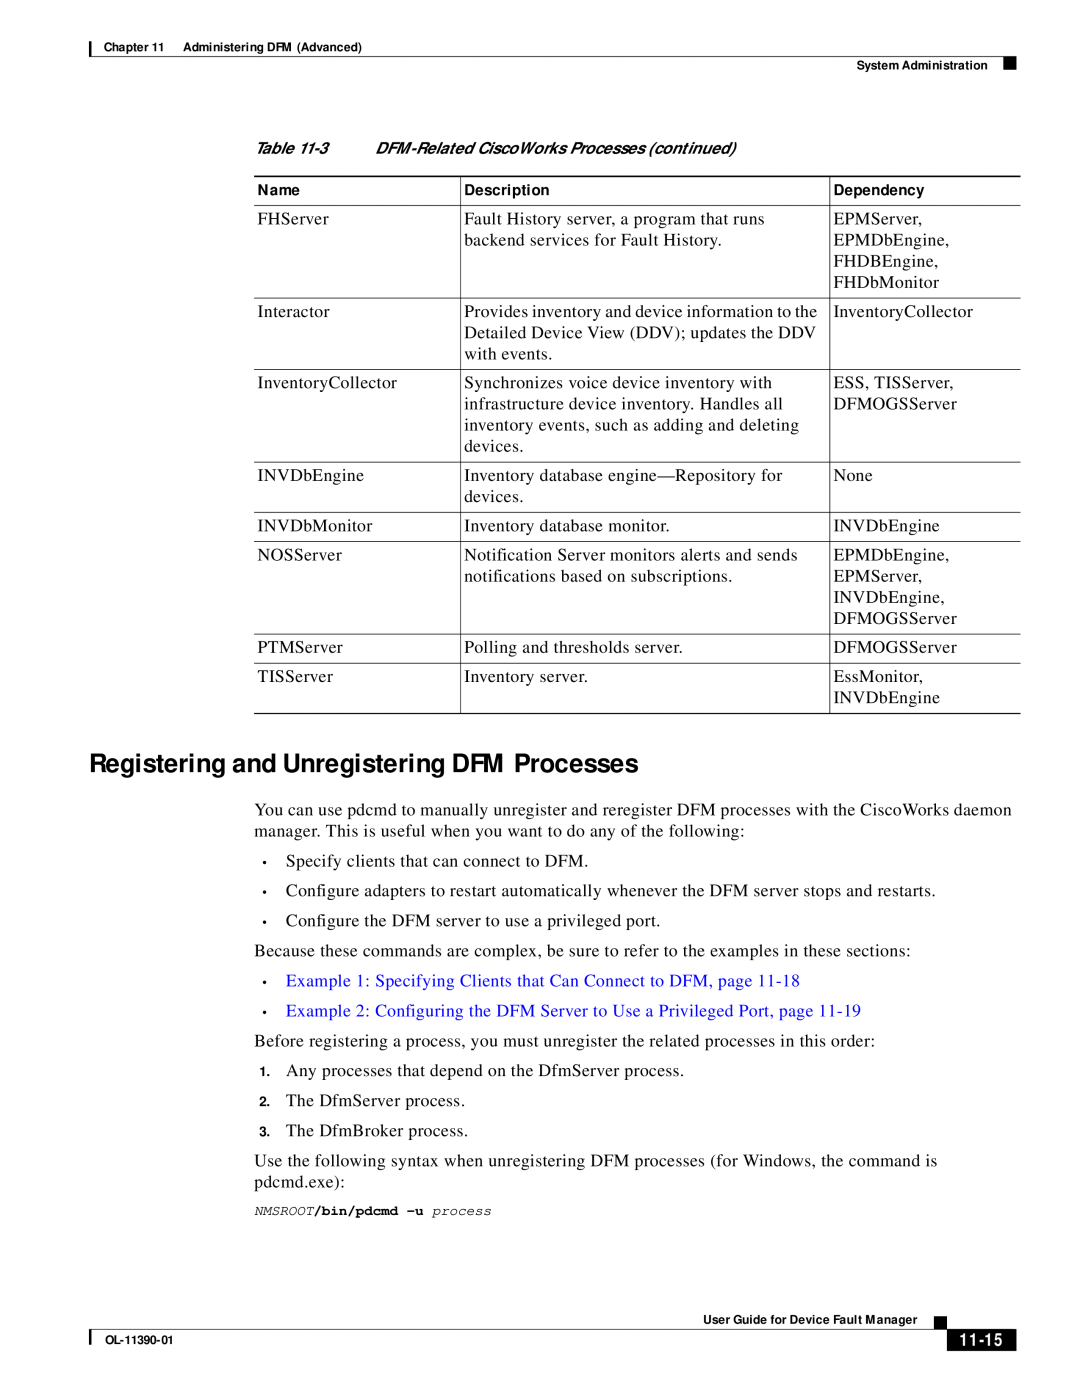 Cisco Systems OL-11390-01 manual Registering and Unregistering DFM Processes, 11-15, Name, Description, Dependency 